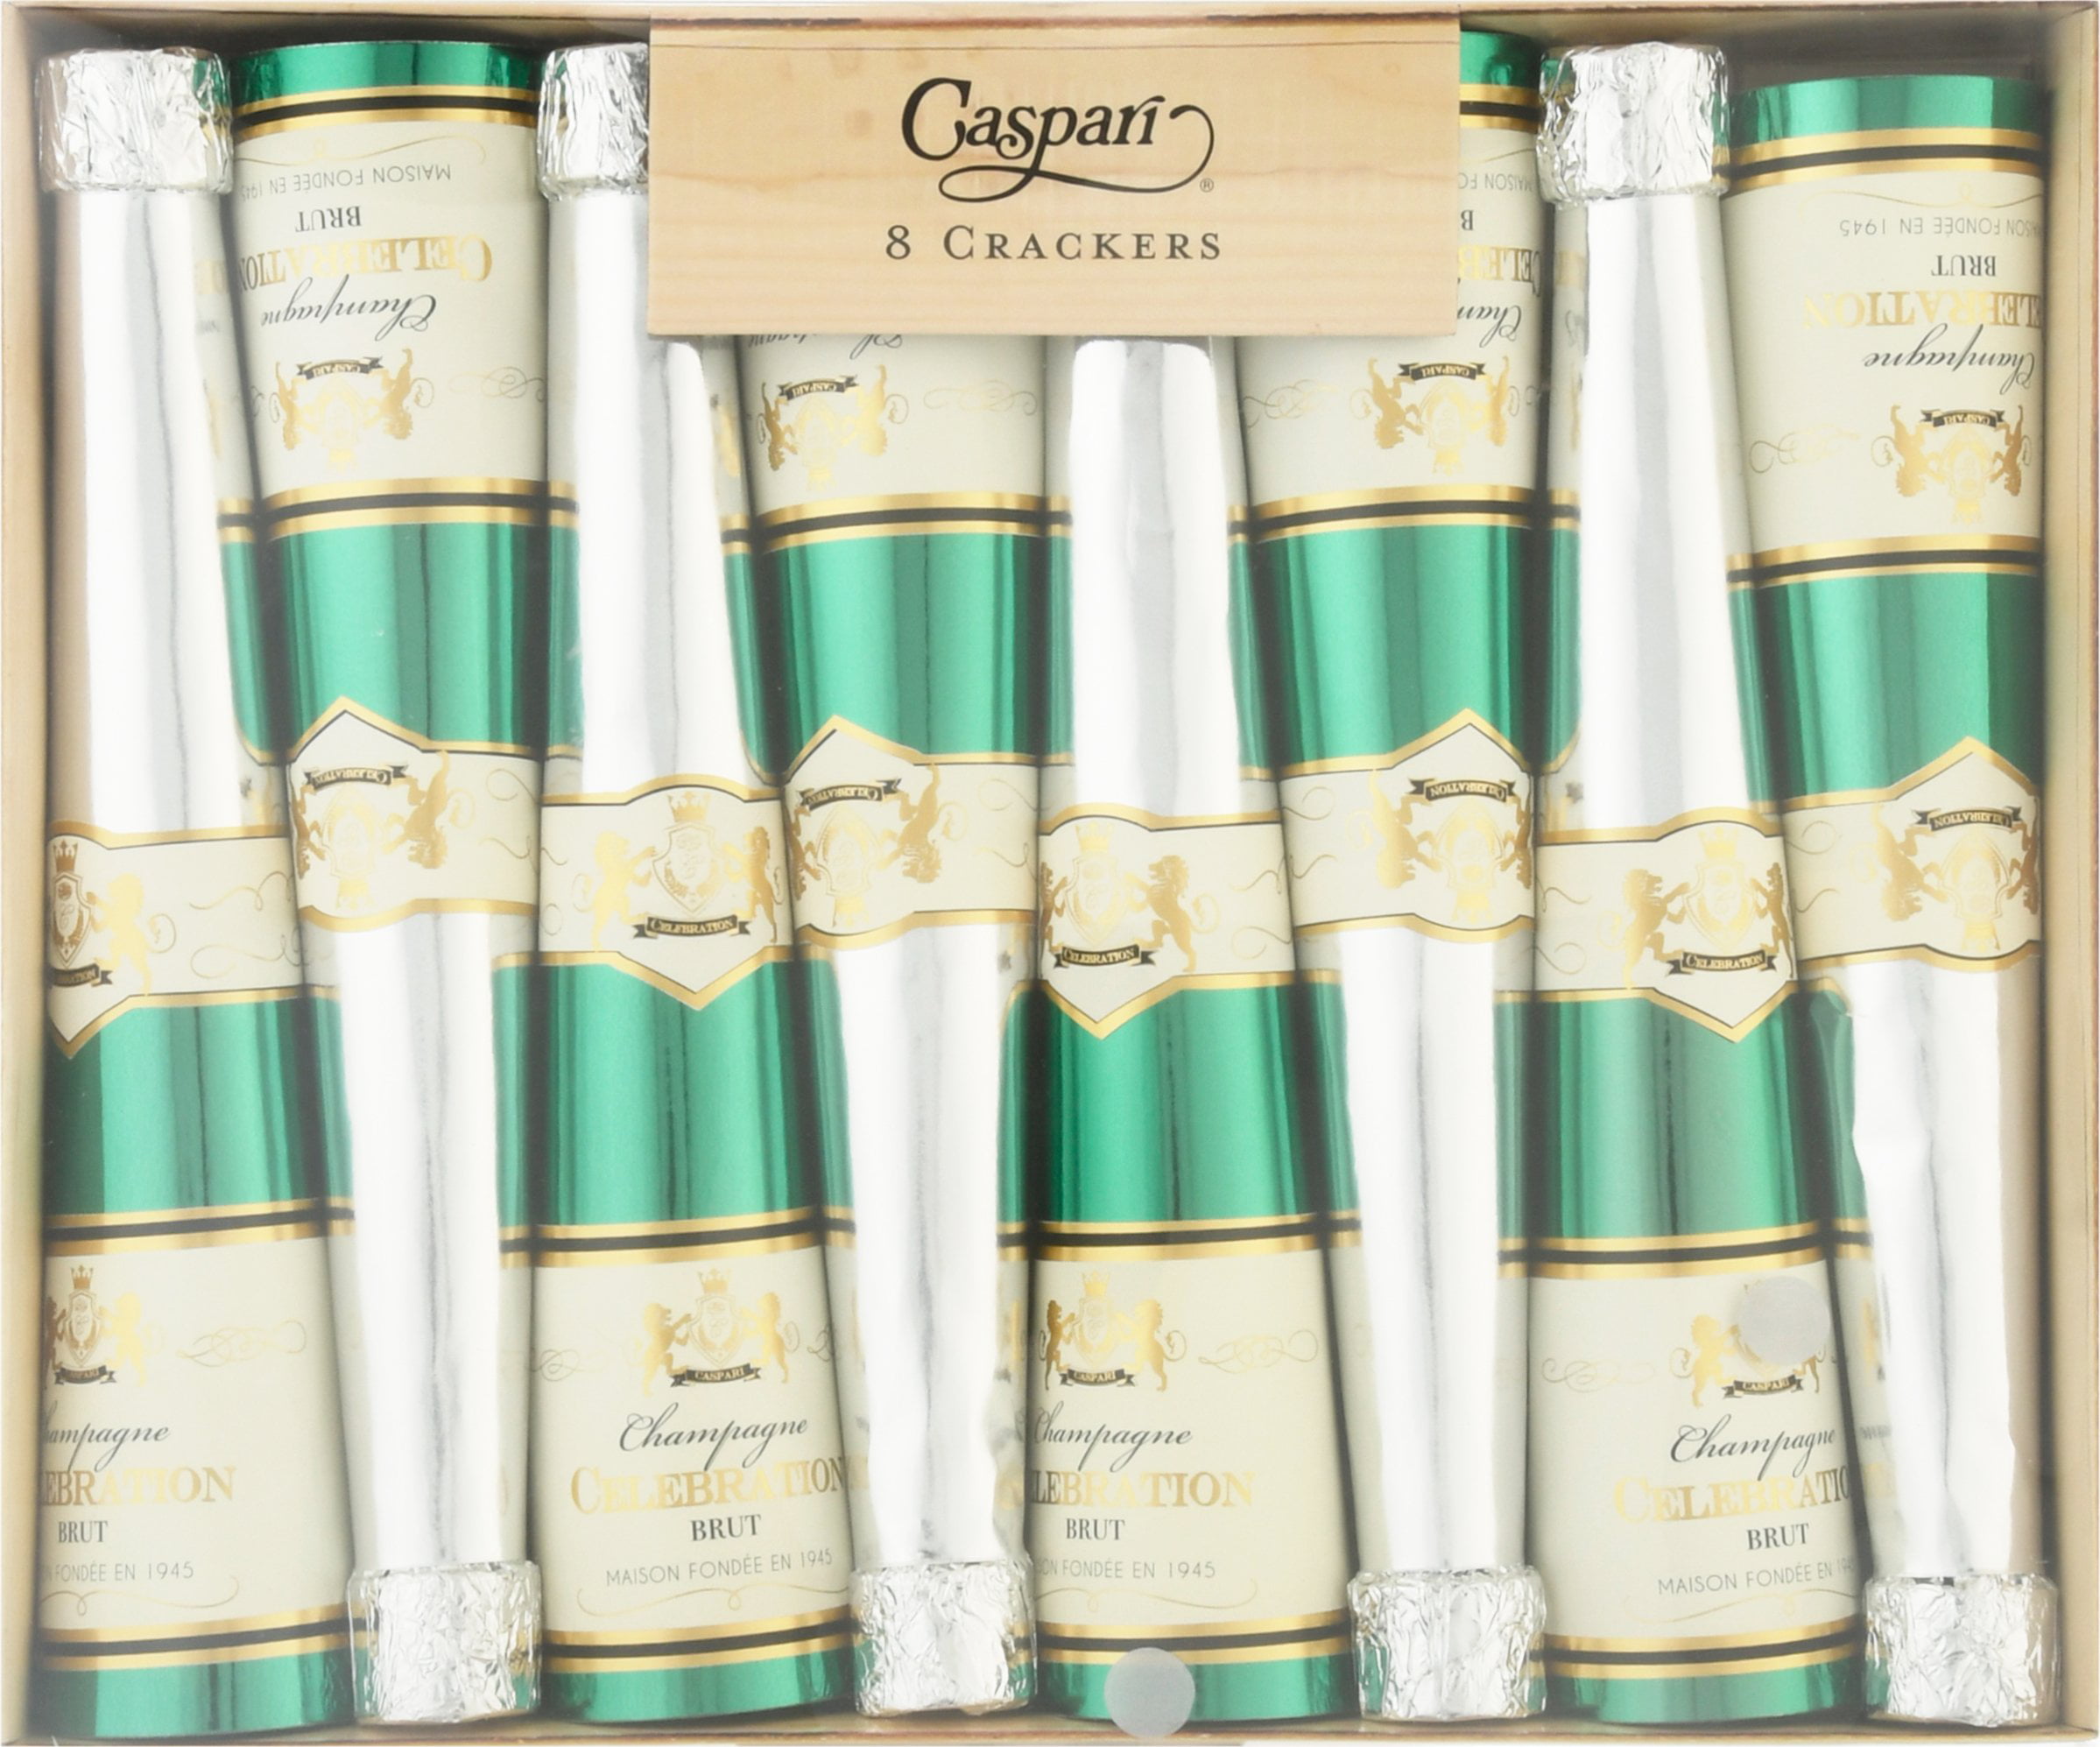 CK111.12 Santa Hat Caspari Cone-Shaped Christmas Crackers Box of 8 